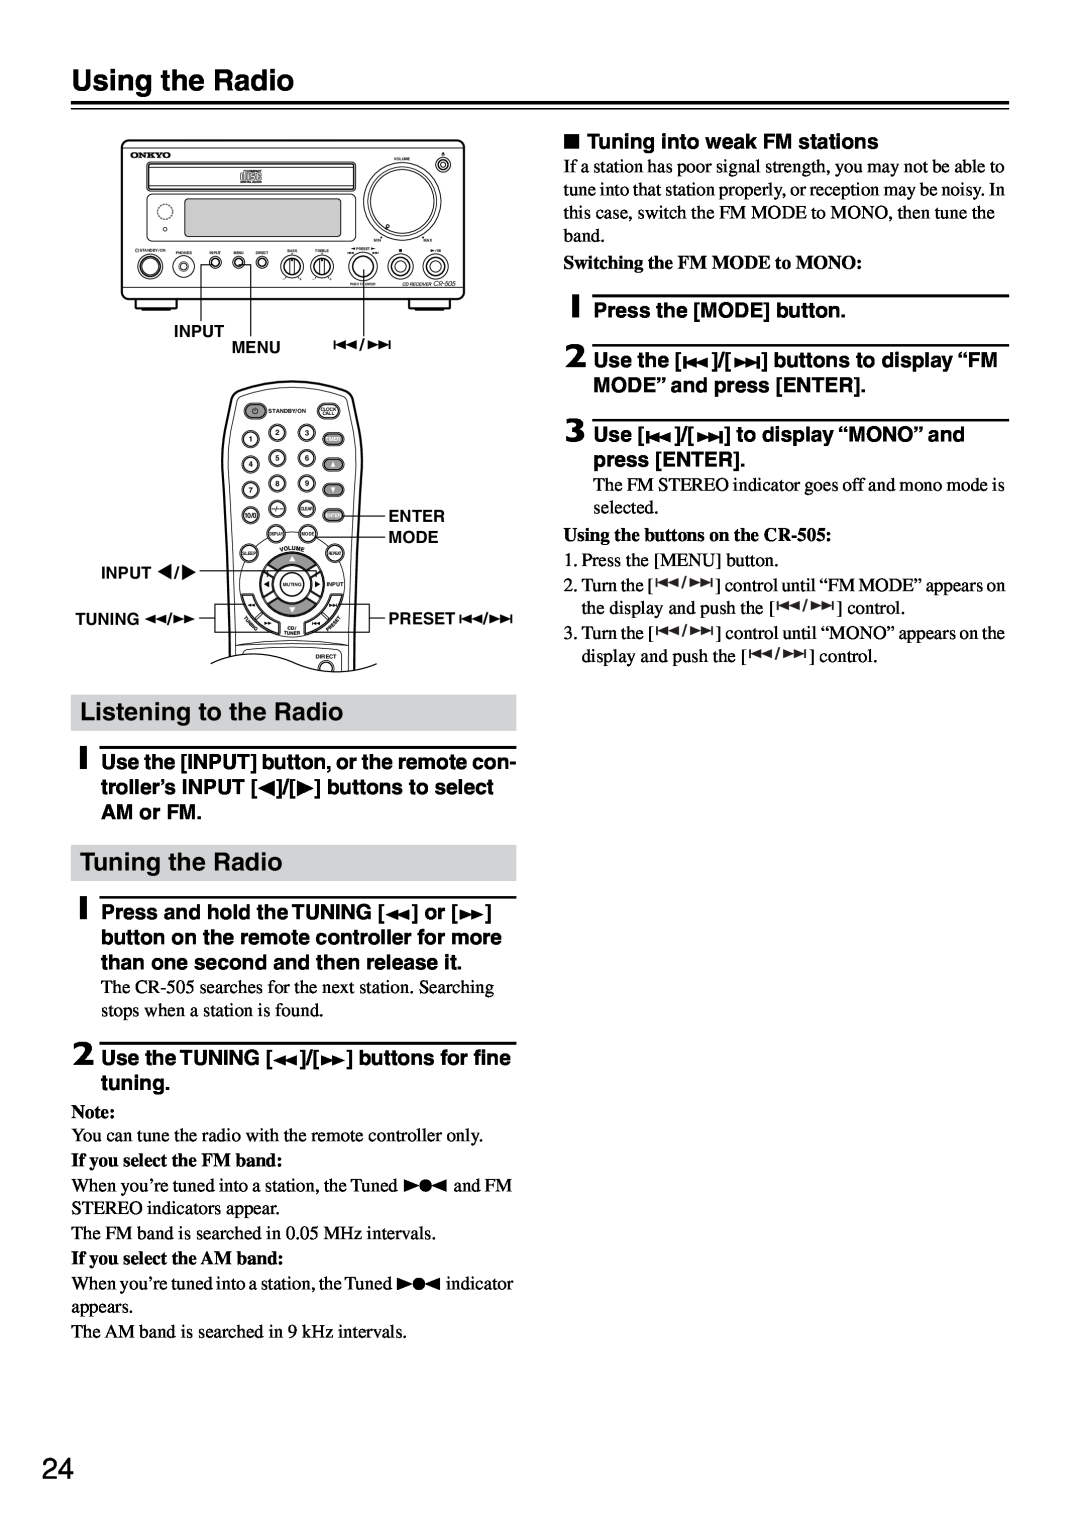 Onkyo CR-505 instruction manual Using the Radio, Listening to the Radio, Tuning the Radio, If you select the FM band 